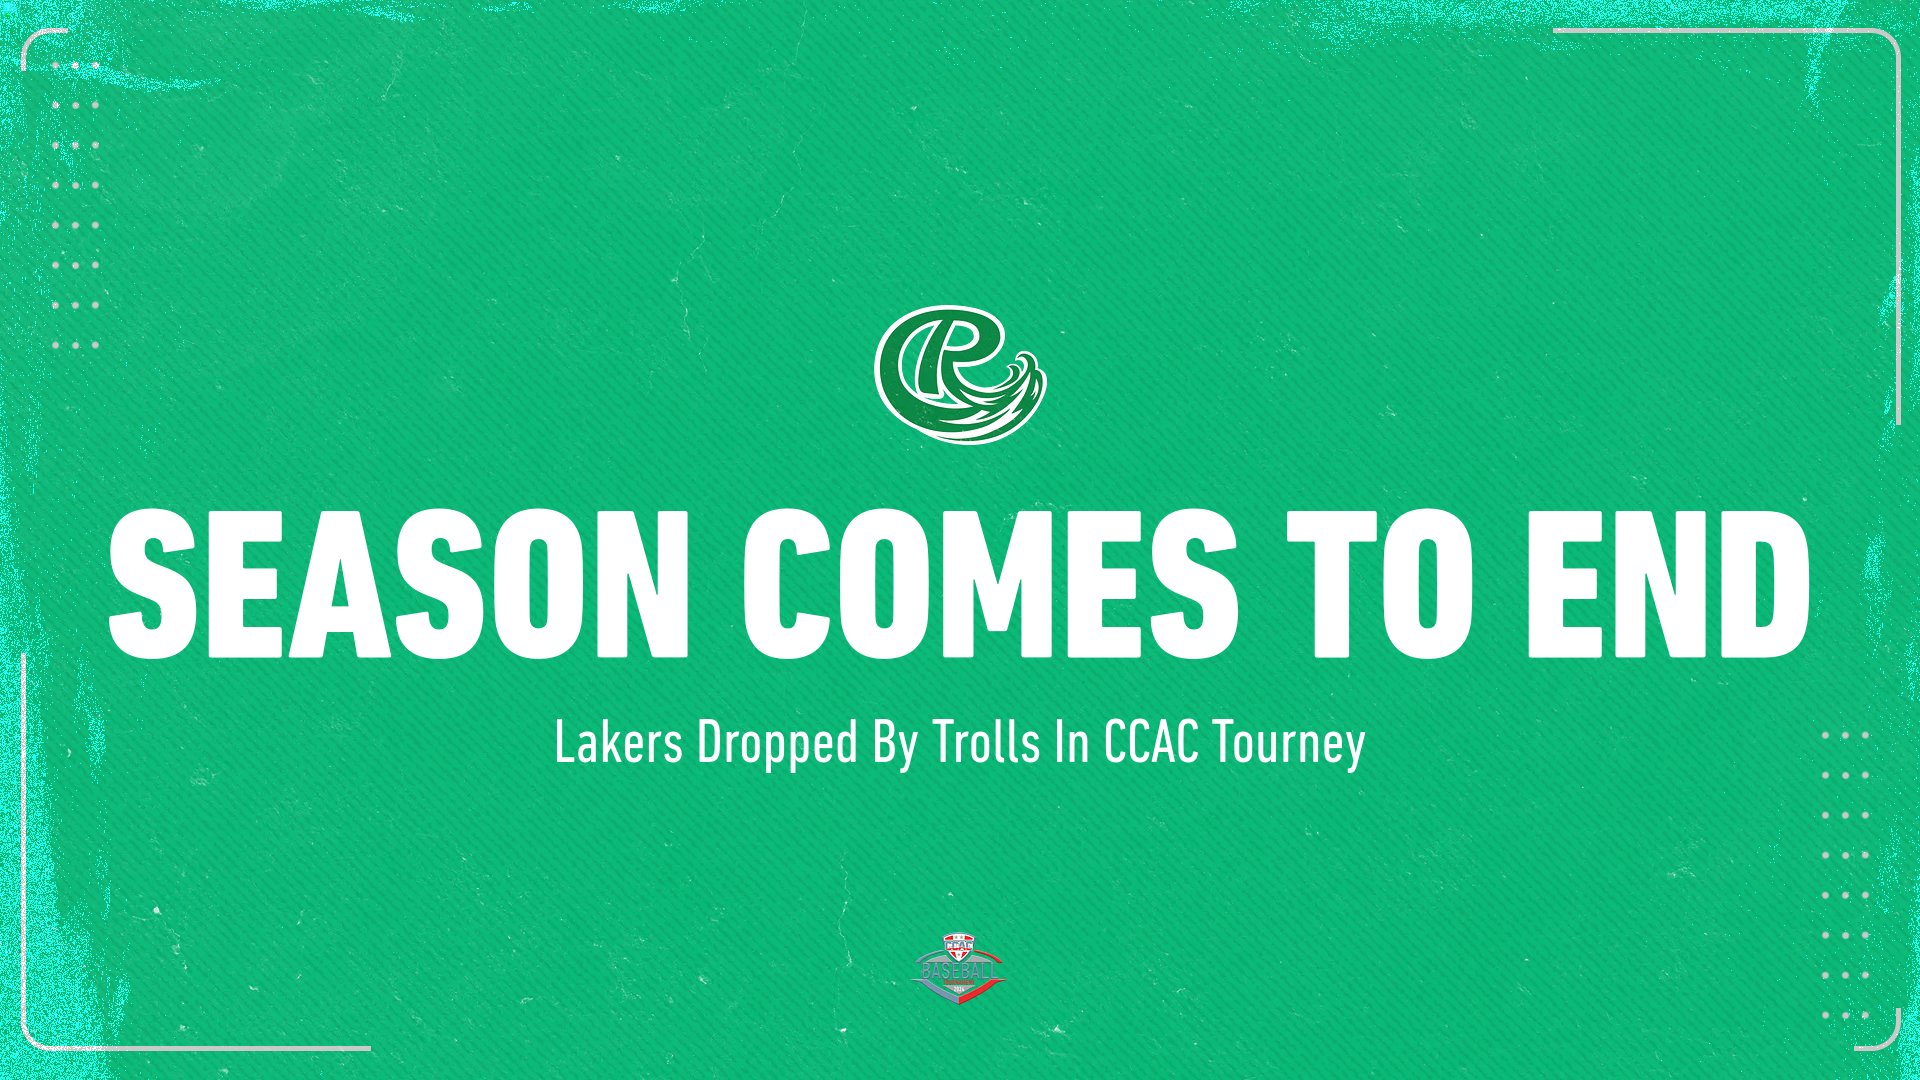 Trolls End Lakers' Season In CCAC Tournament